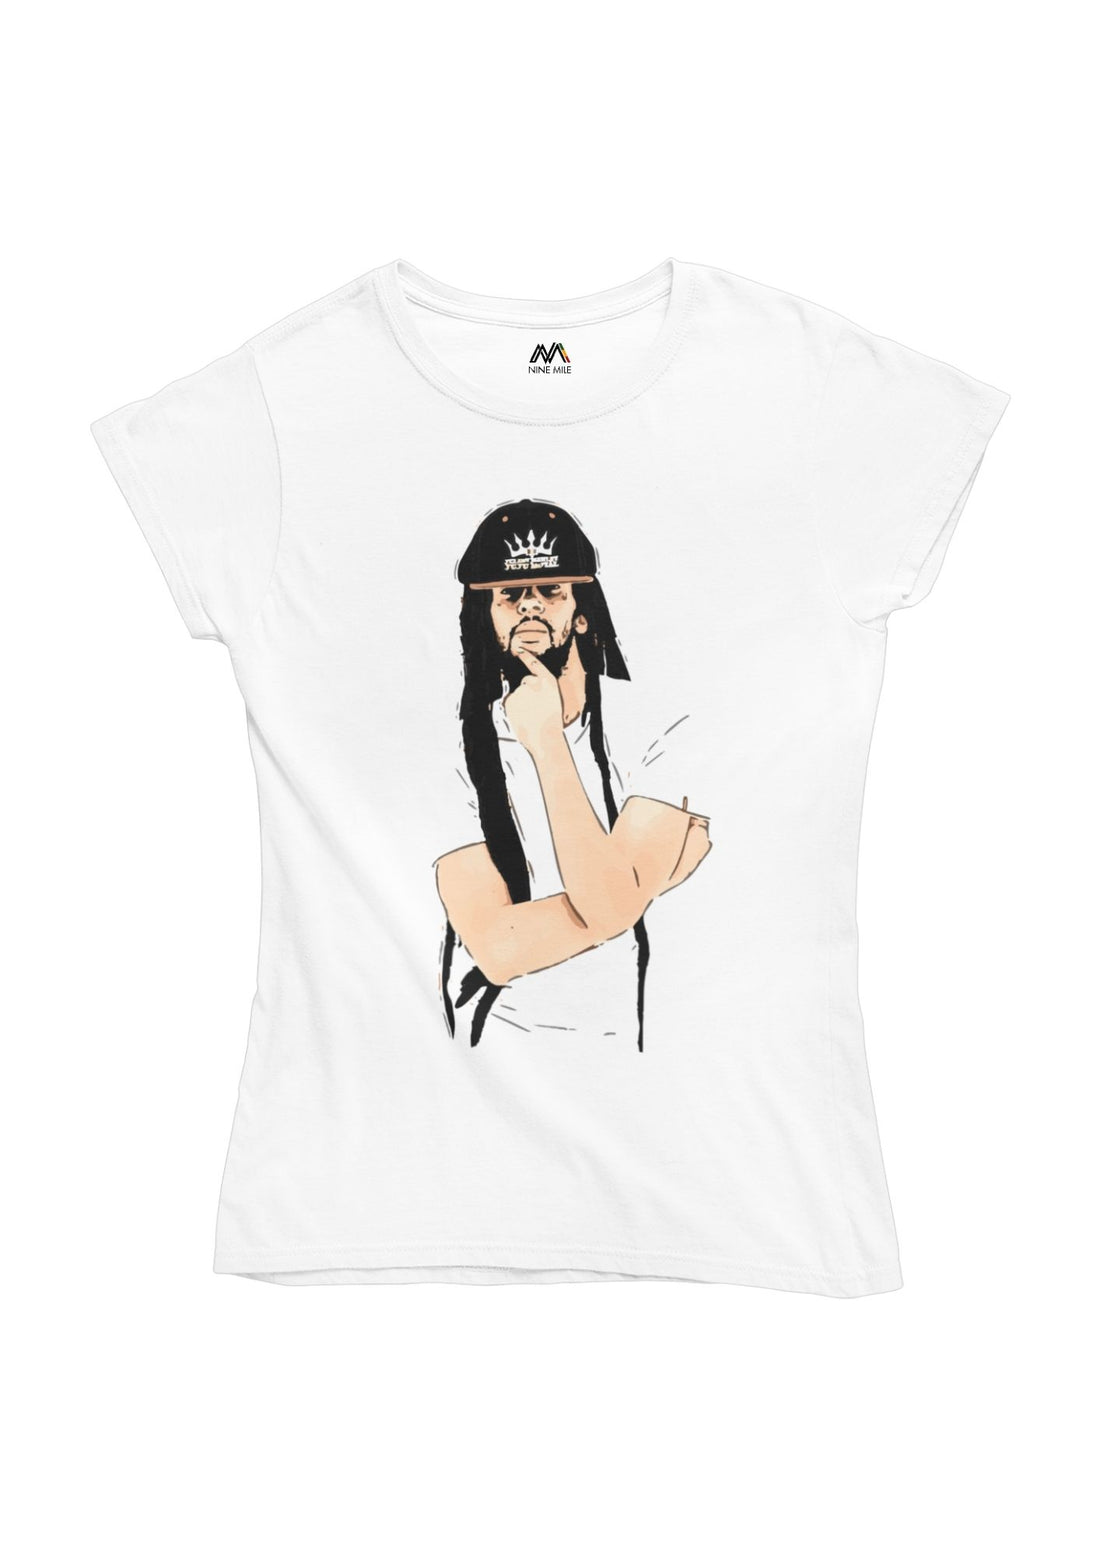 Julian Marley 'Rude Boy' T-Shirt - Nine Mile Clothing 